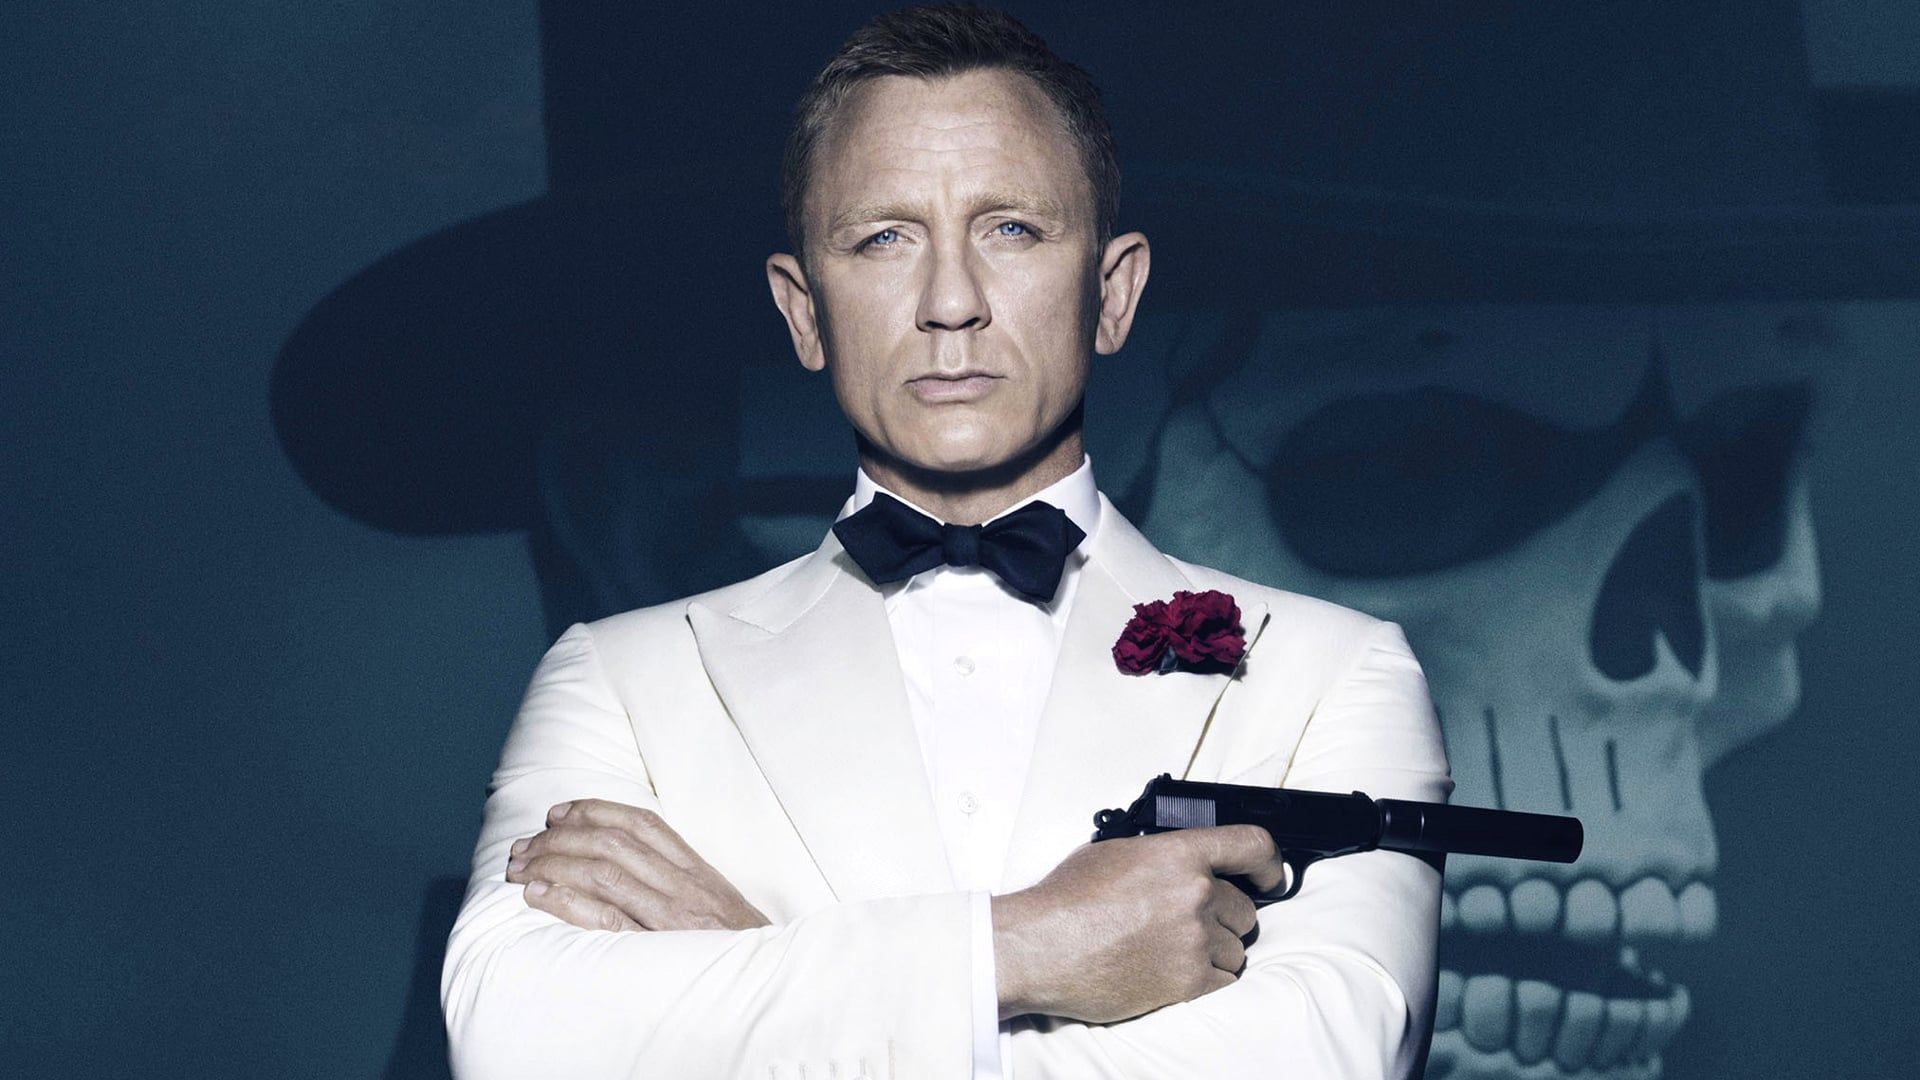 007 desktop background